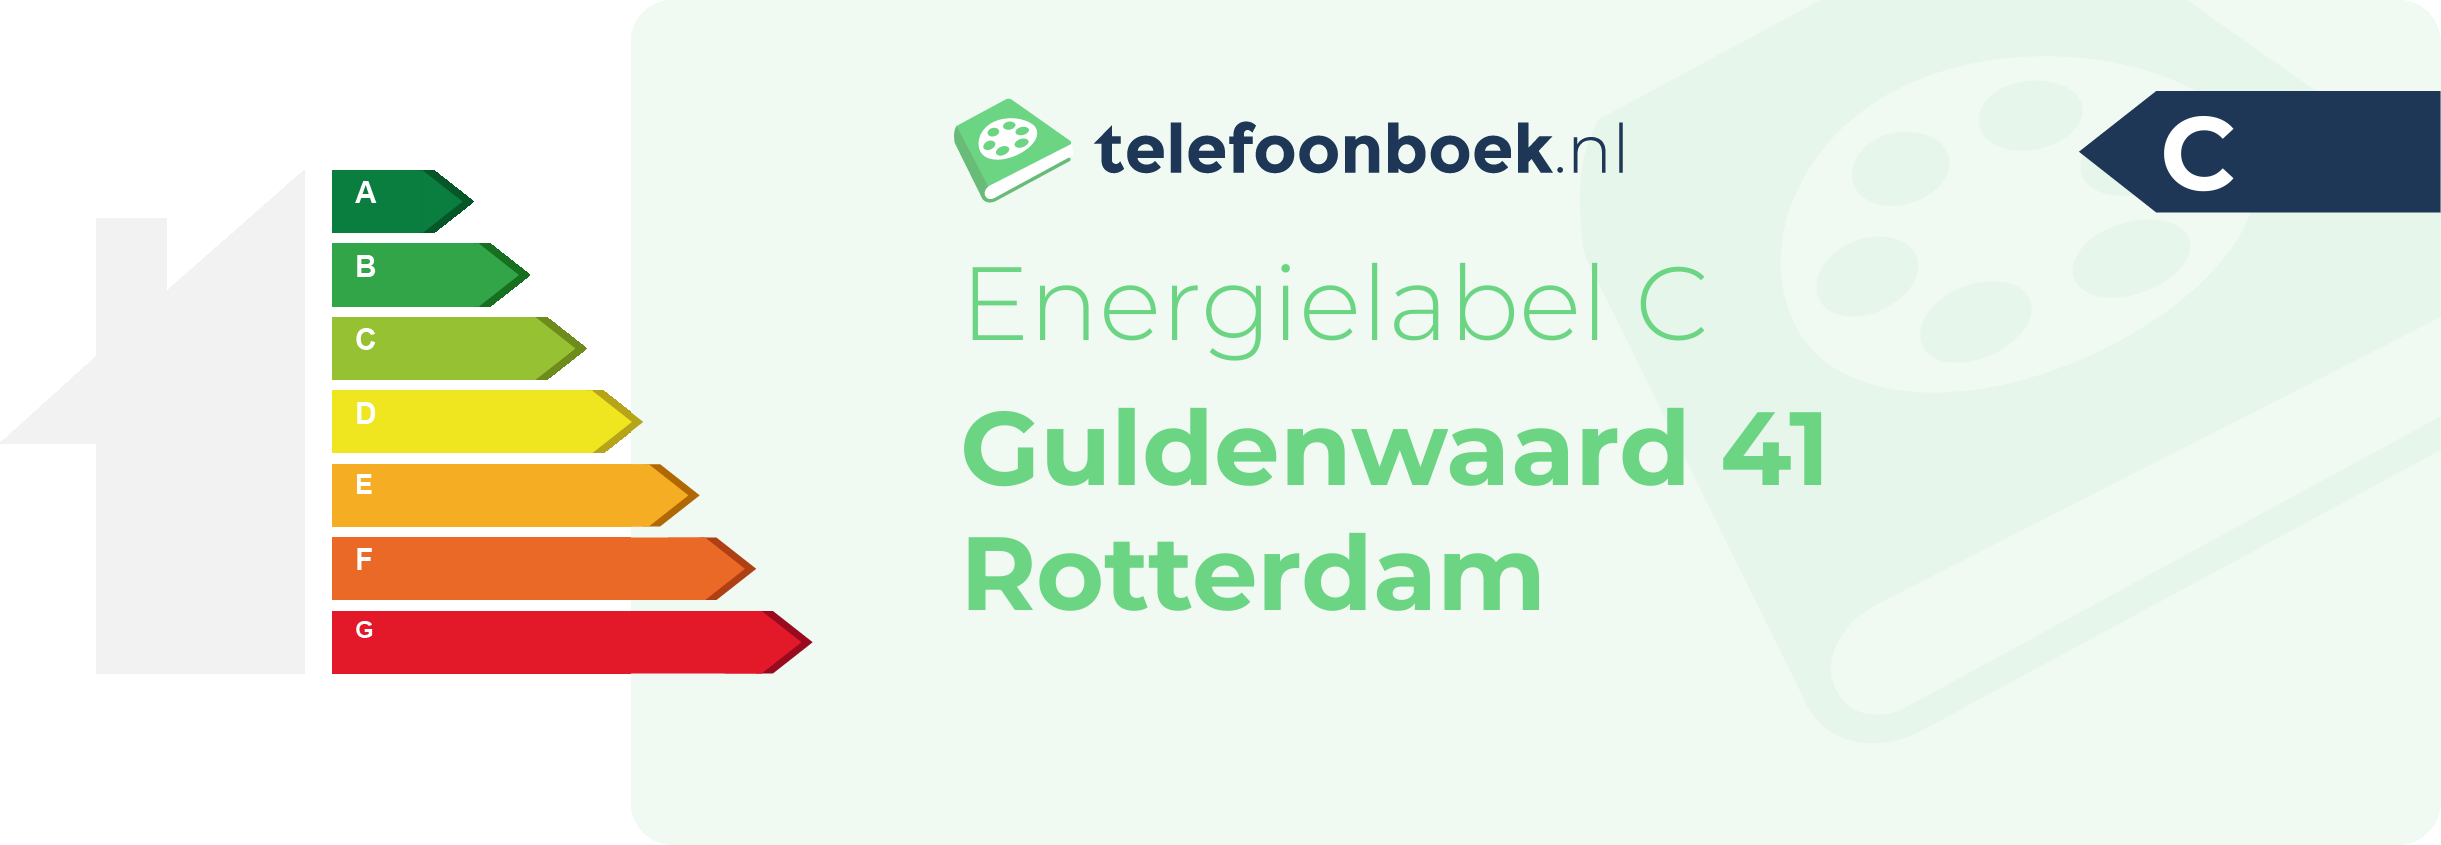 Energielabel Guldenwaard 41 Rotterdam